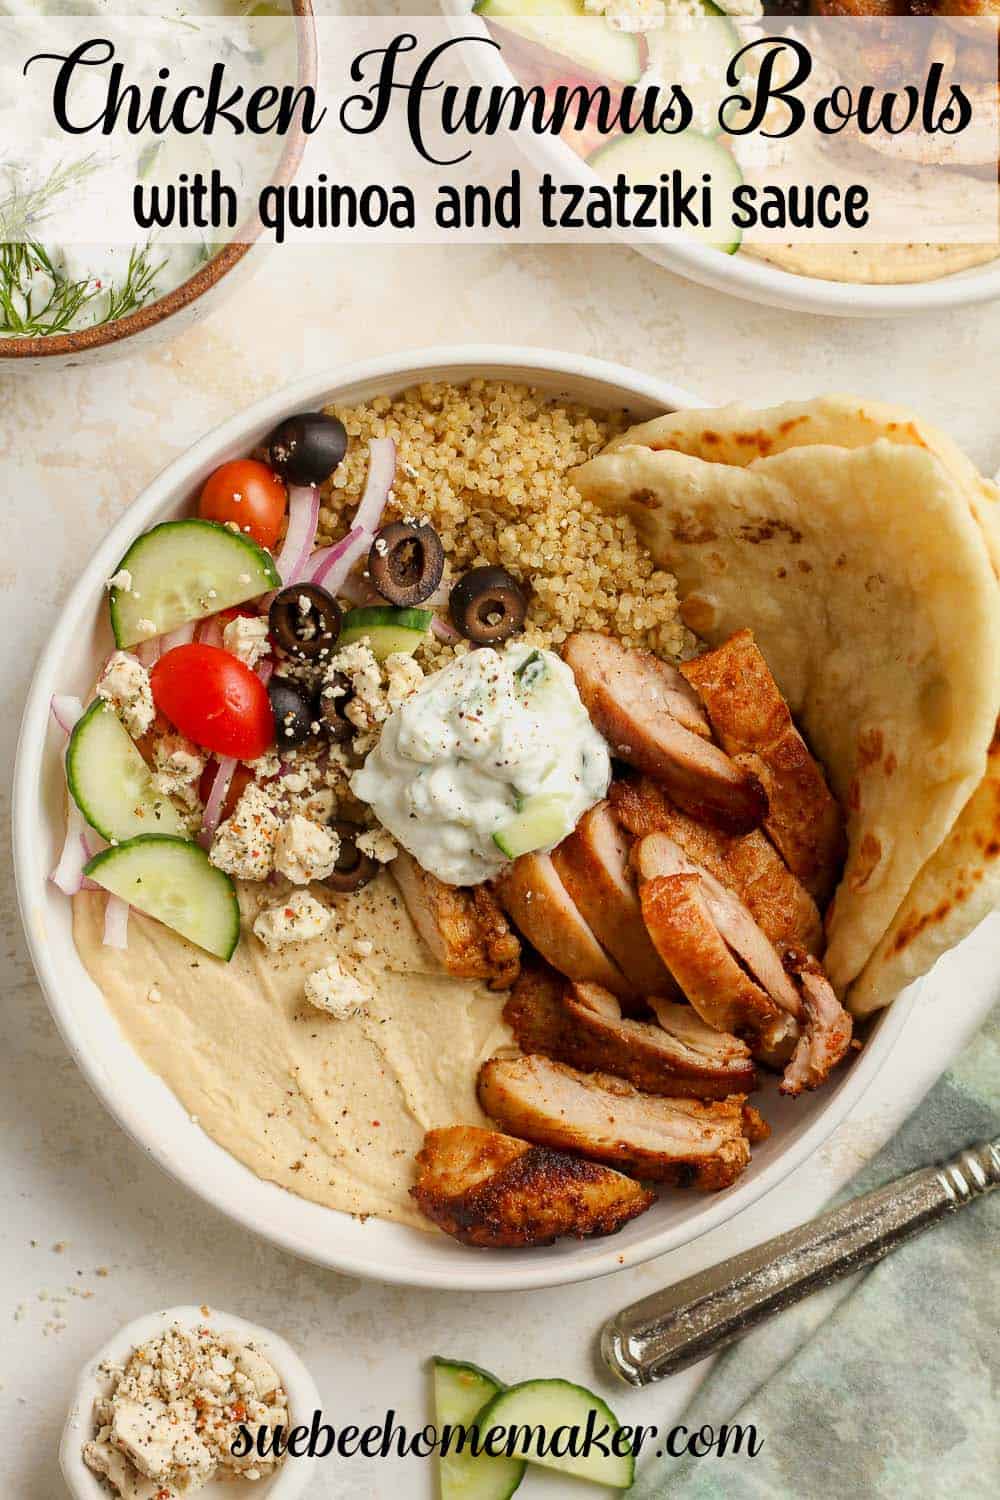 A chicken and hummus bowl with quinoa, tzatziki sauce, and veggies.